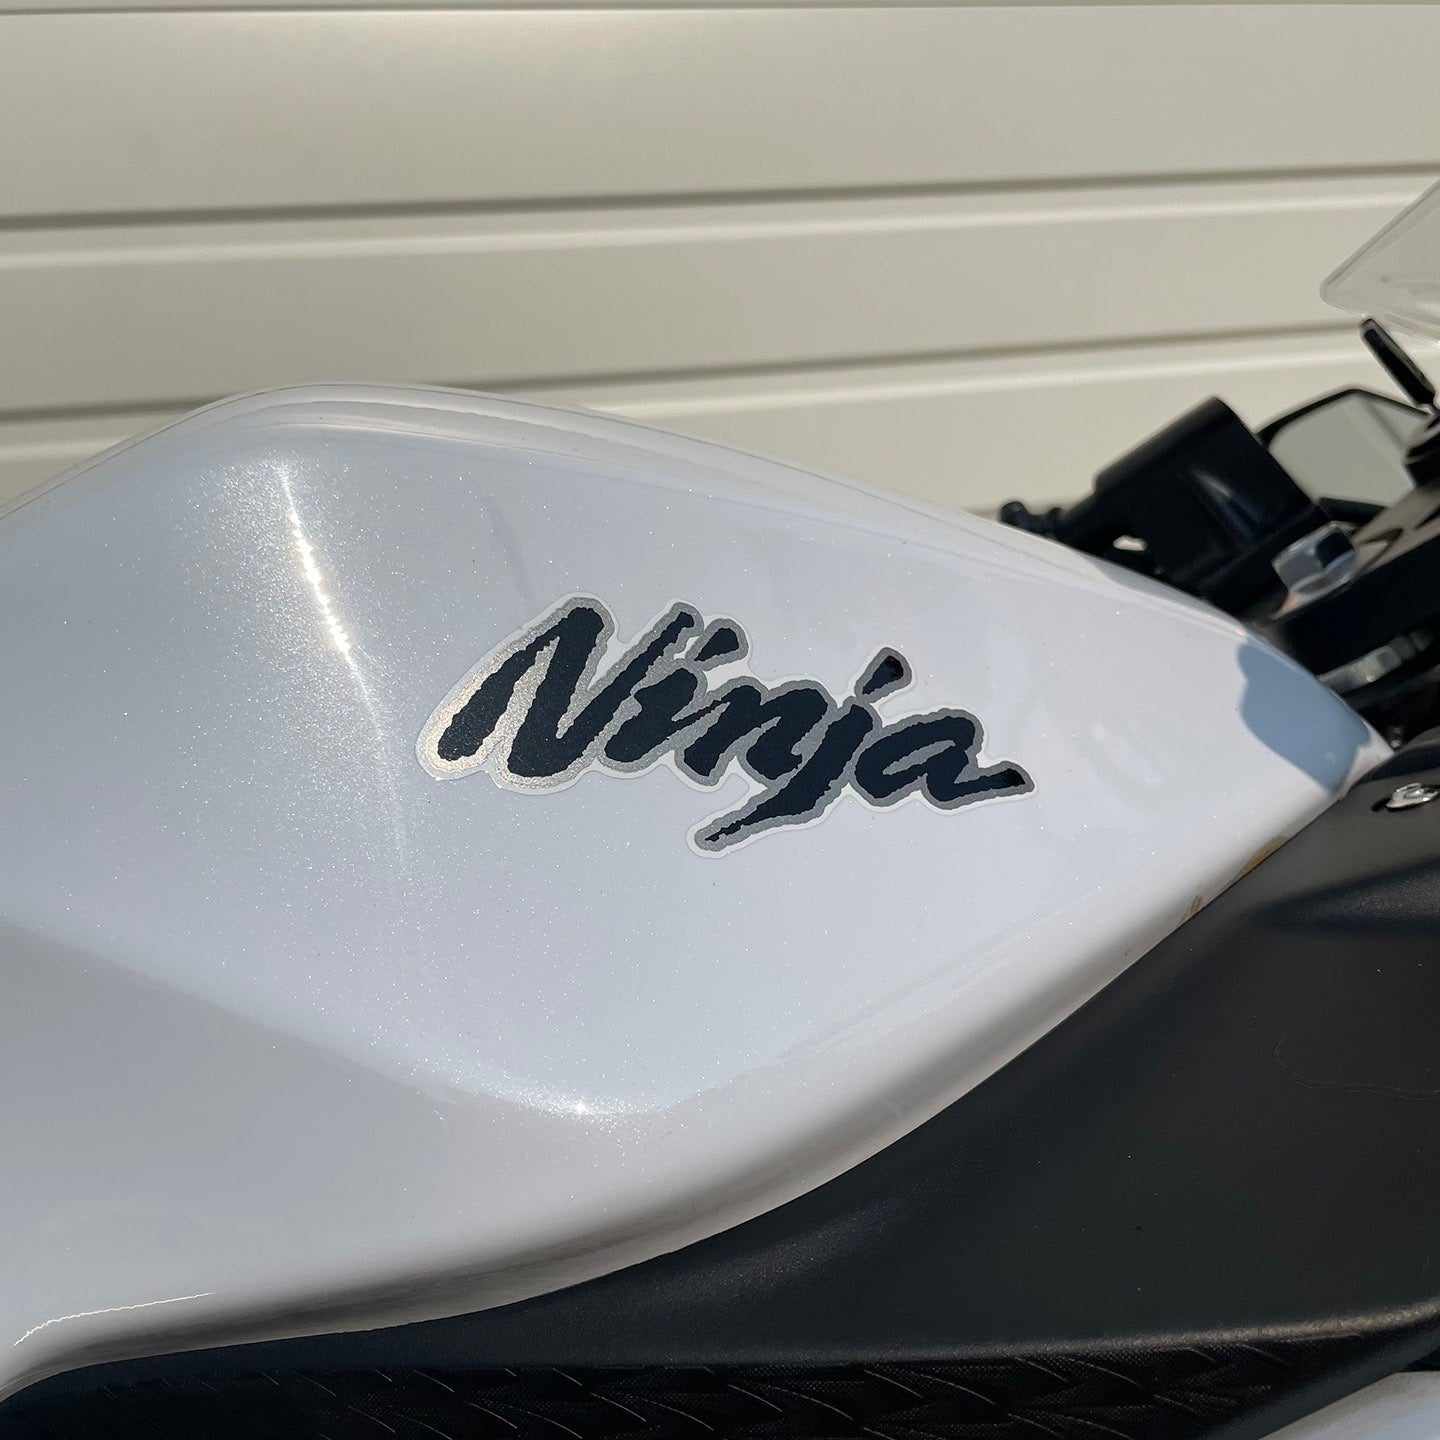 2013 Kawasaki Ninja 300 (6,935 Miles)